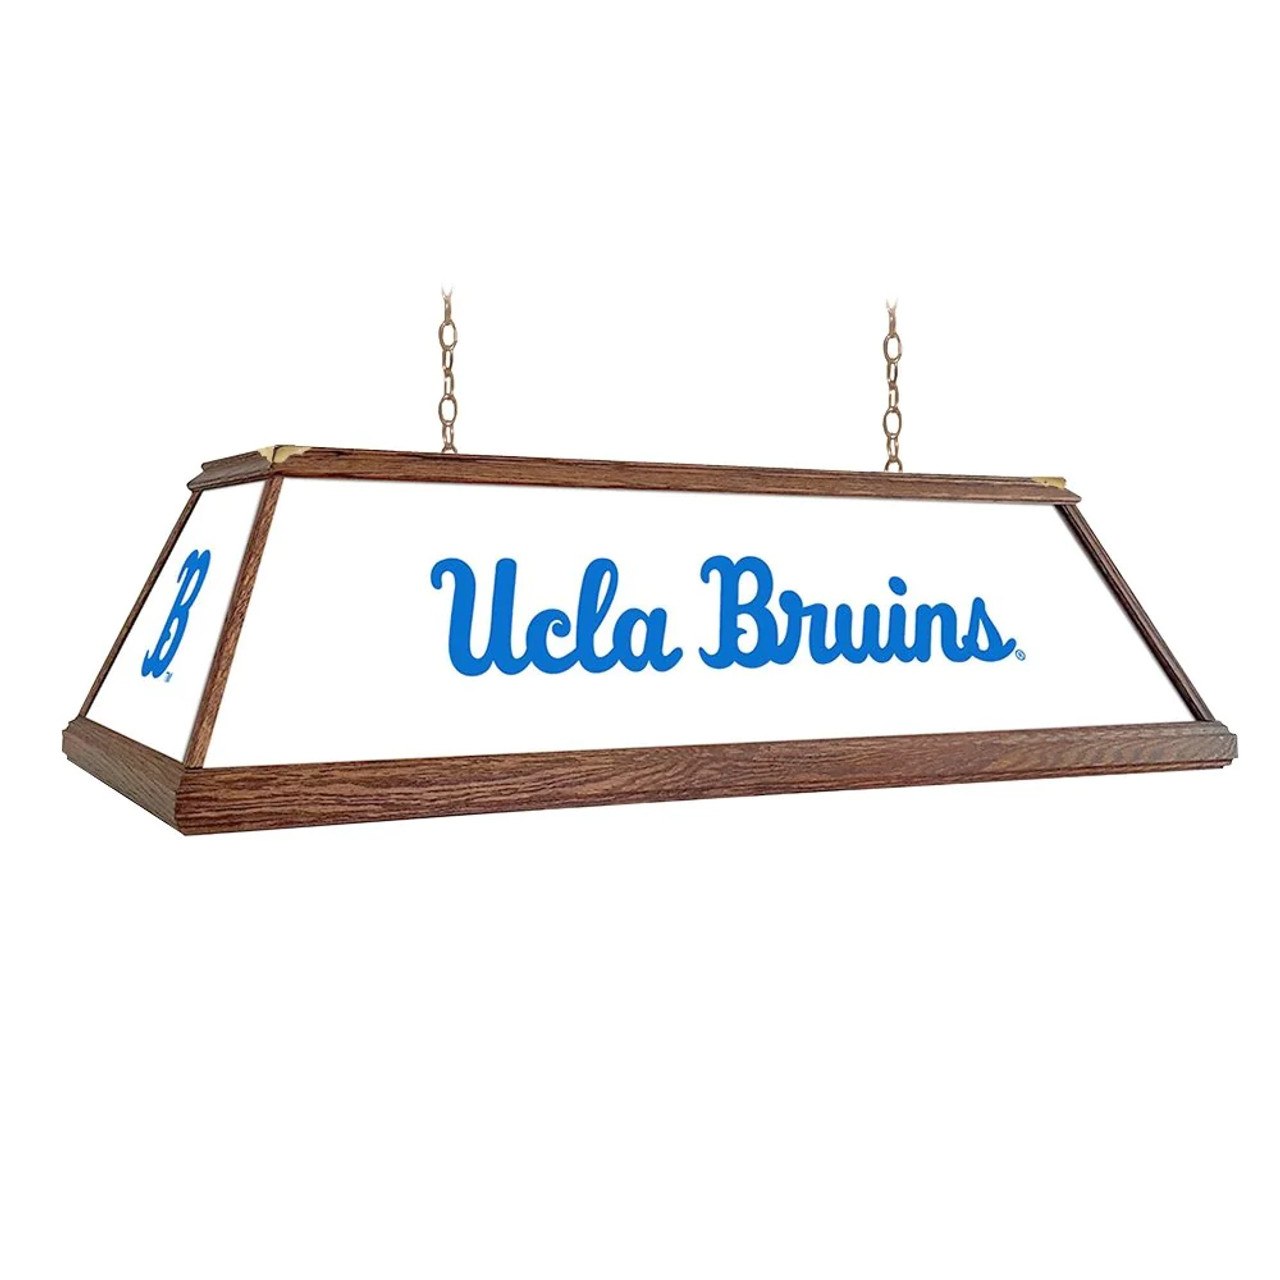 UCLA, University, California, Los Angeles, Bruins, Premium, Wood, Billiard, Pool, Table, Light, Lamp, NCUCLA-330-01A, NCUCLA-330-01B, NCUCLA-330-02, The Fan-Brand, 688187934655